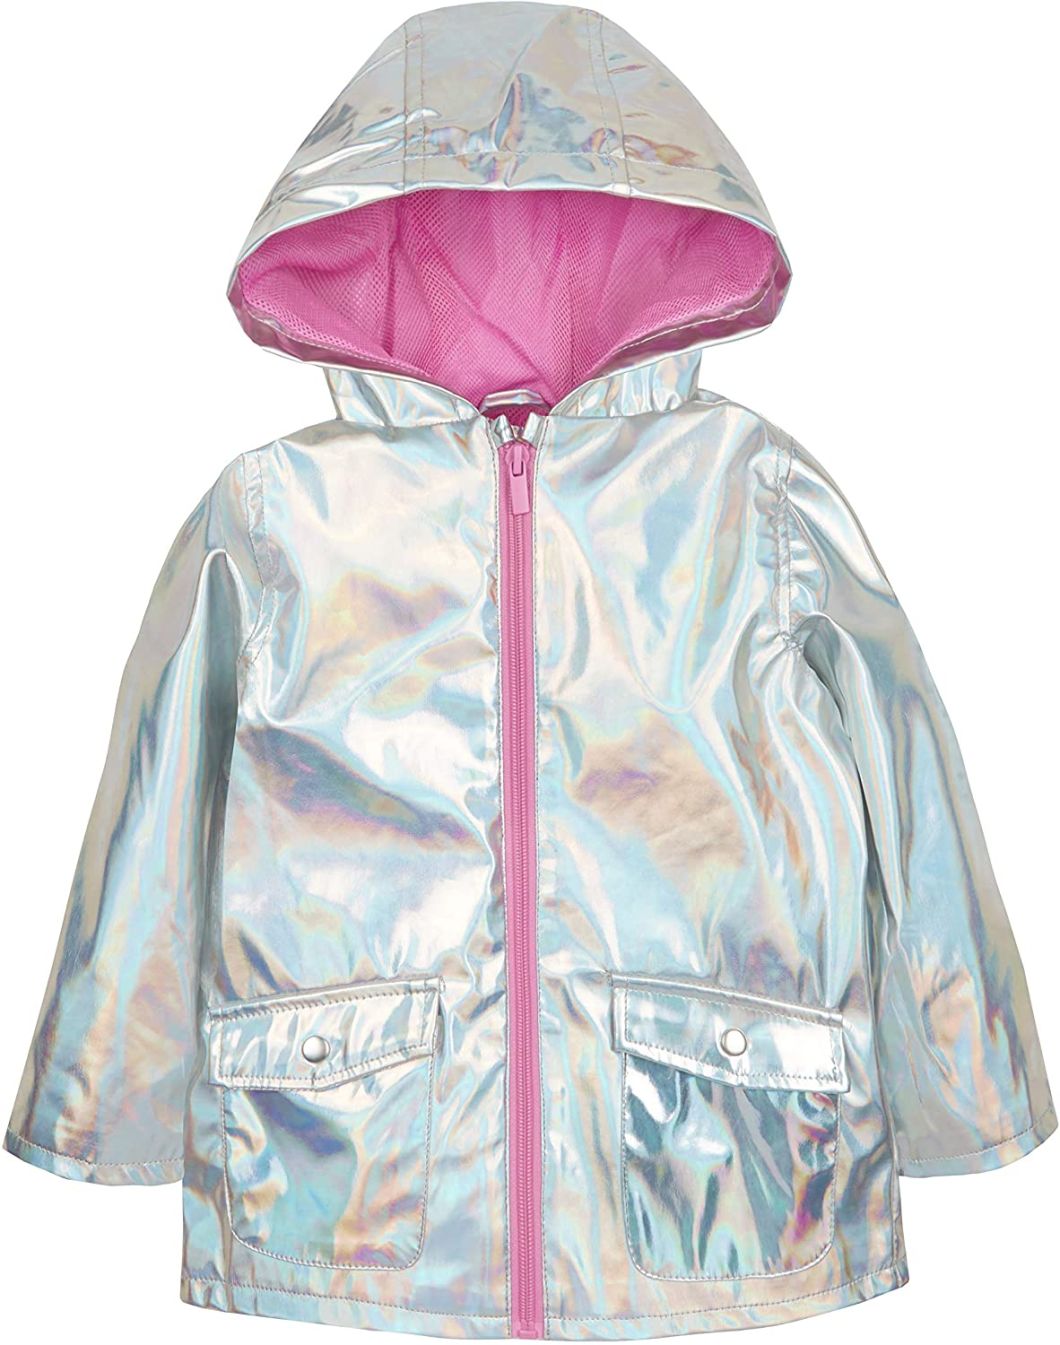 Baby Girls Iridescent Shiny Rain Coat with Hood